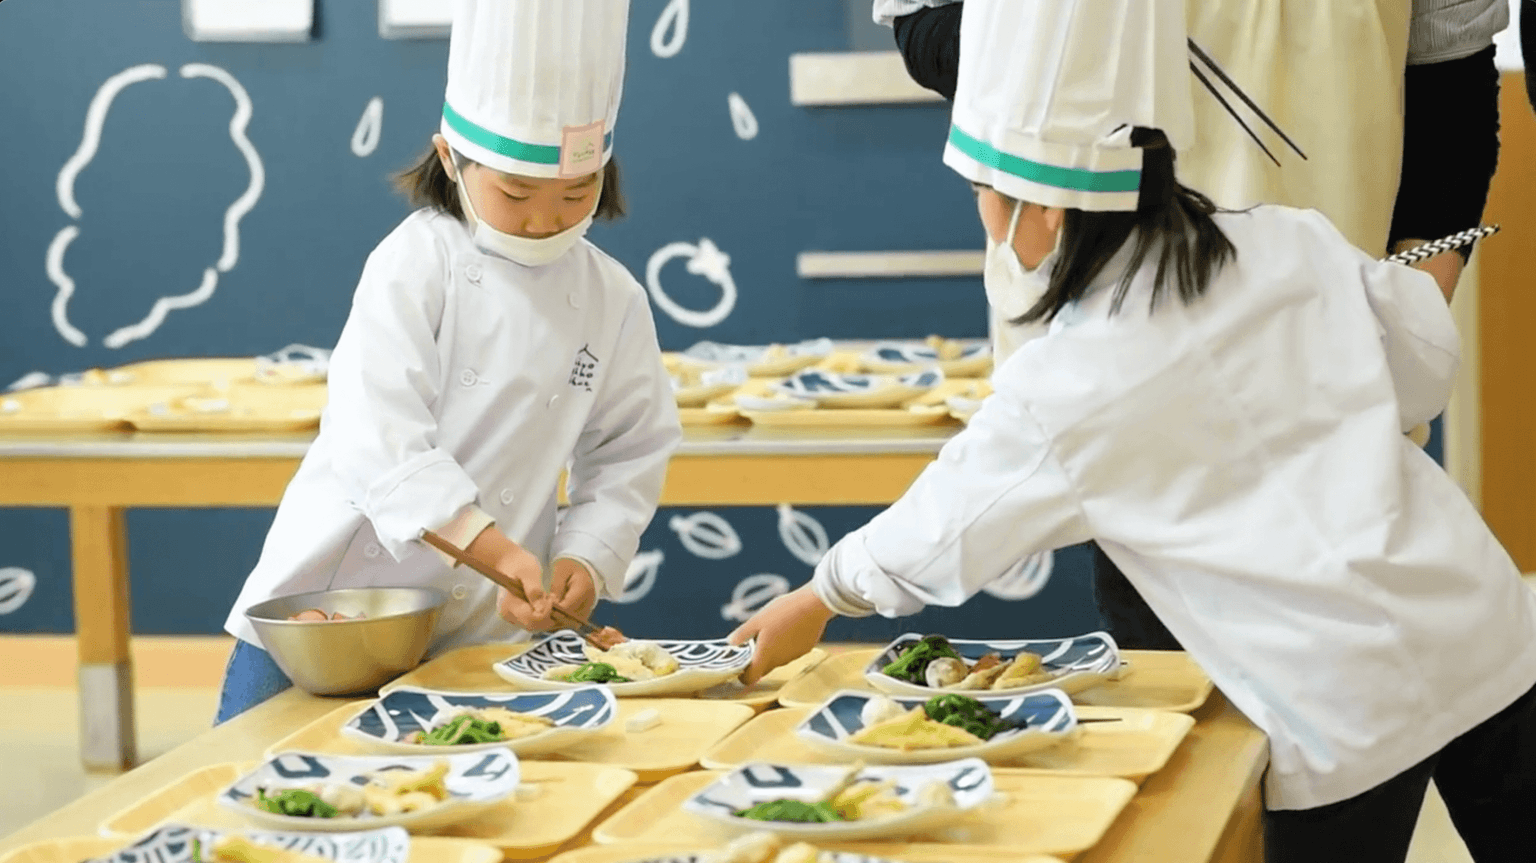 Nursery school children prepare food with real knives